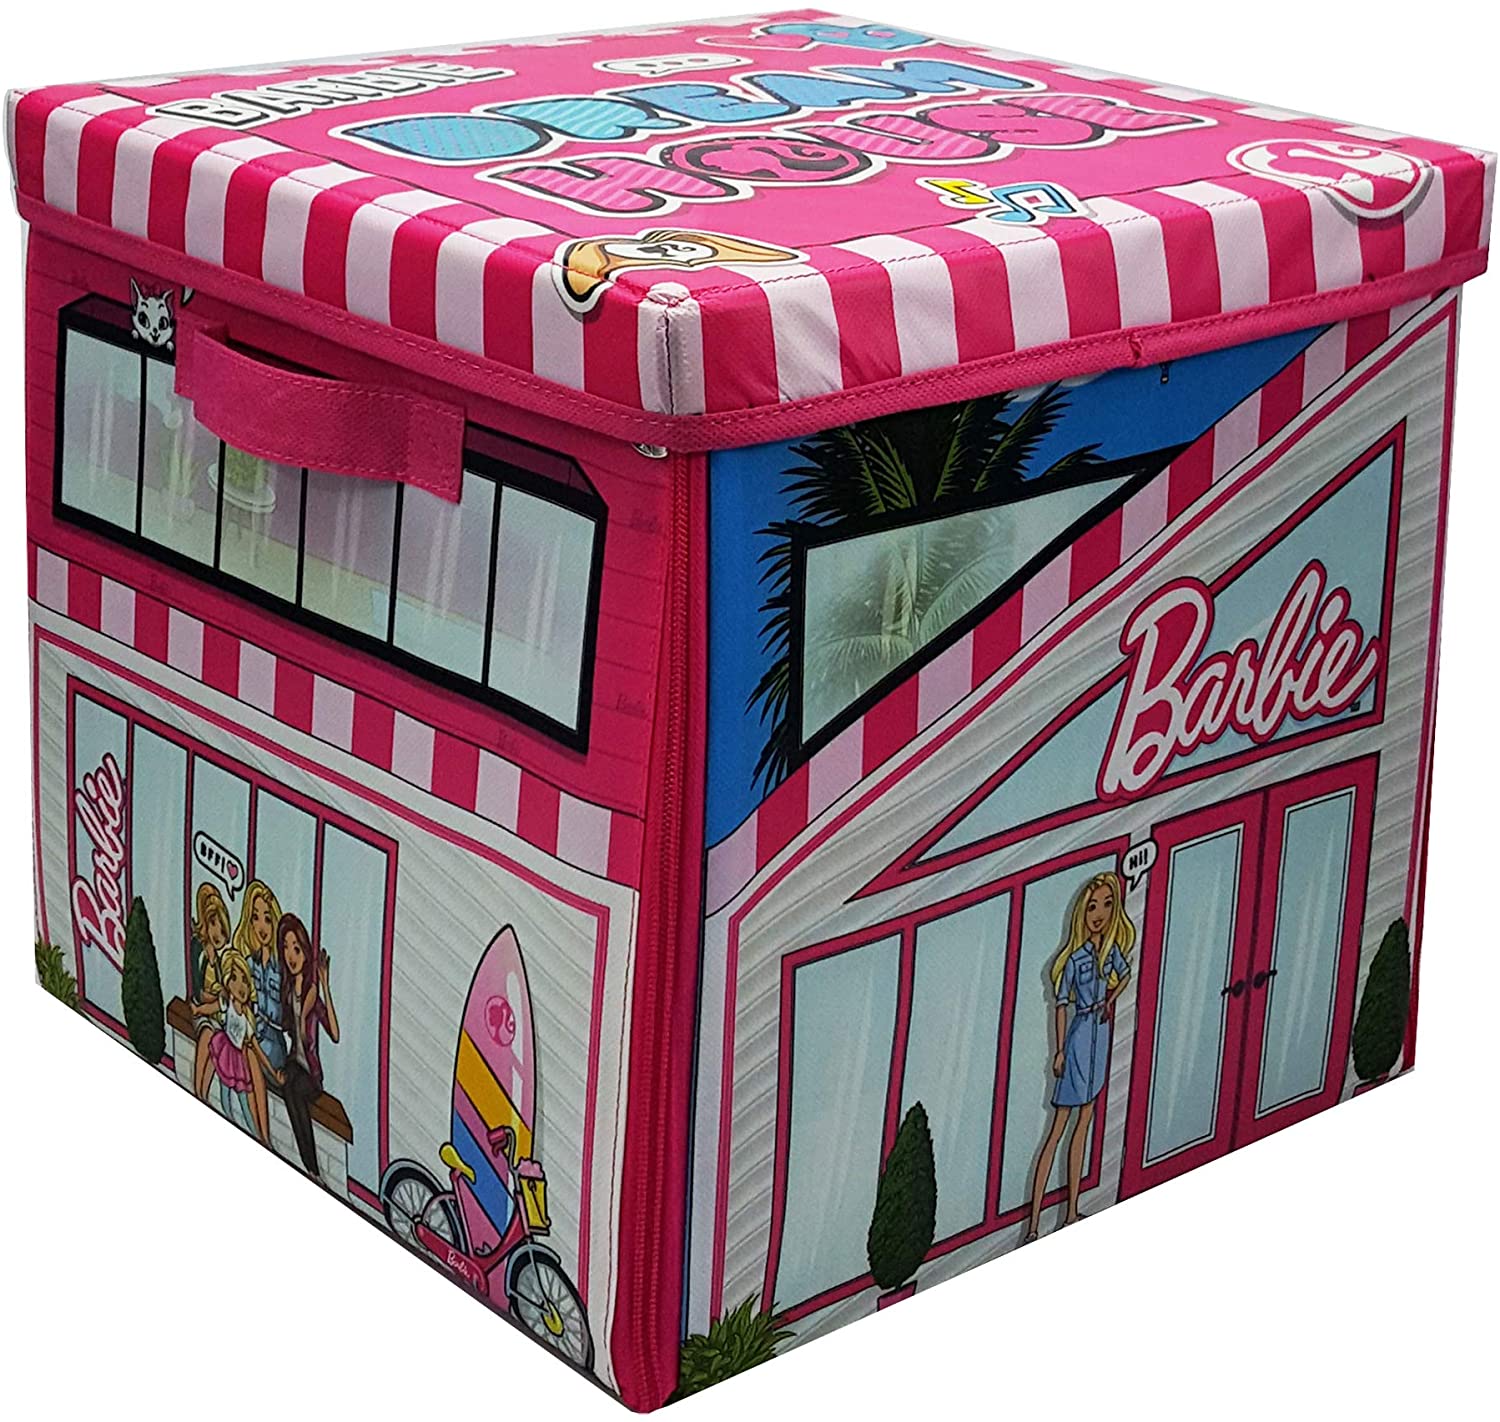 Barbie Dream House Toy Box  & Playmat $13 + 2.5% SD Cashback (PC Req'd) + Free Shipping w/ Prime